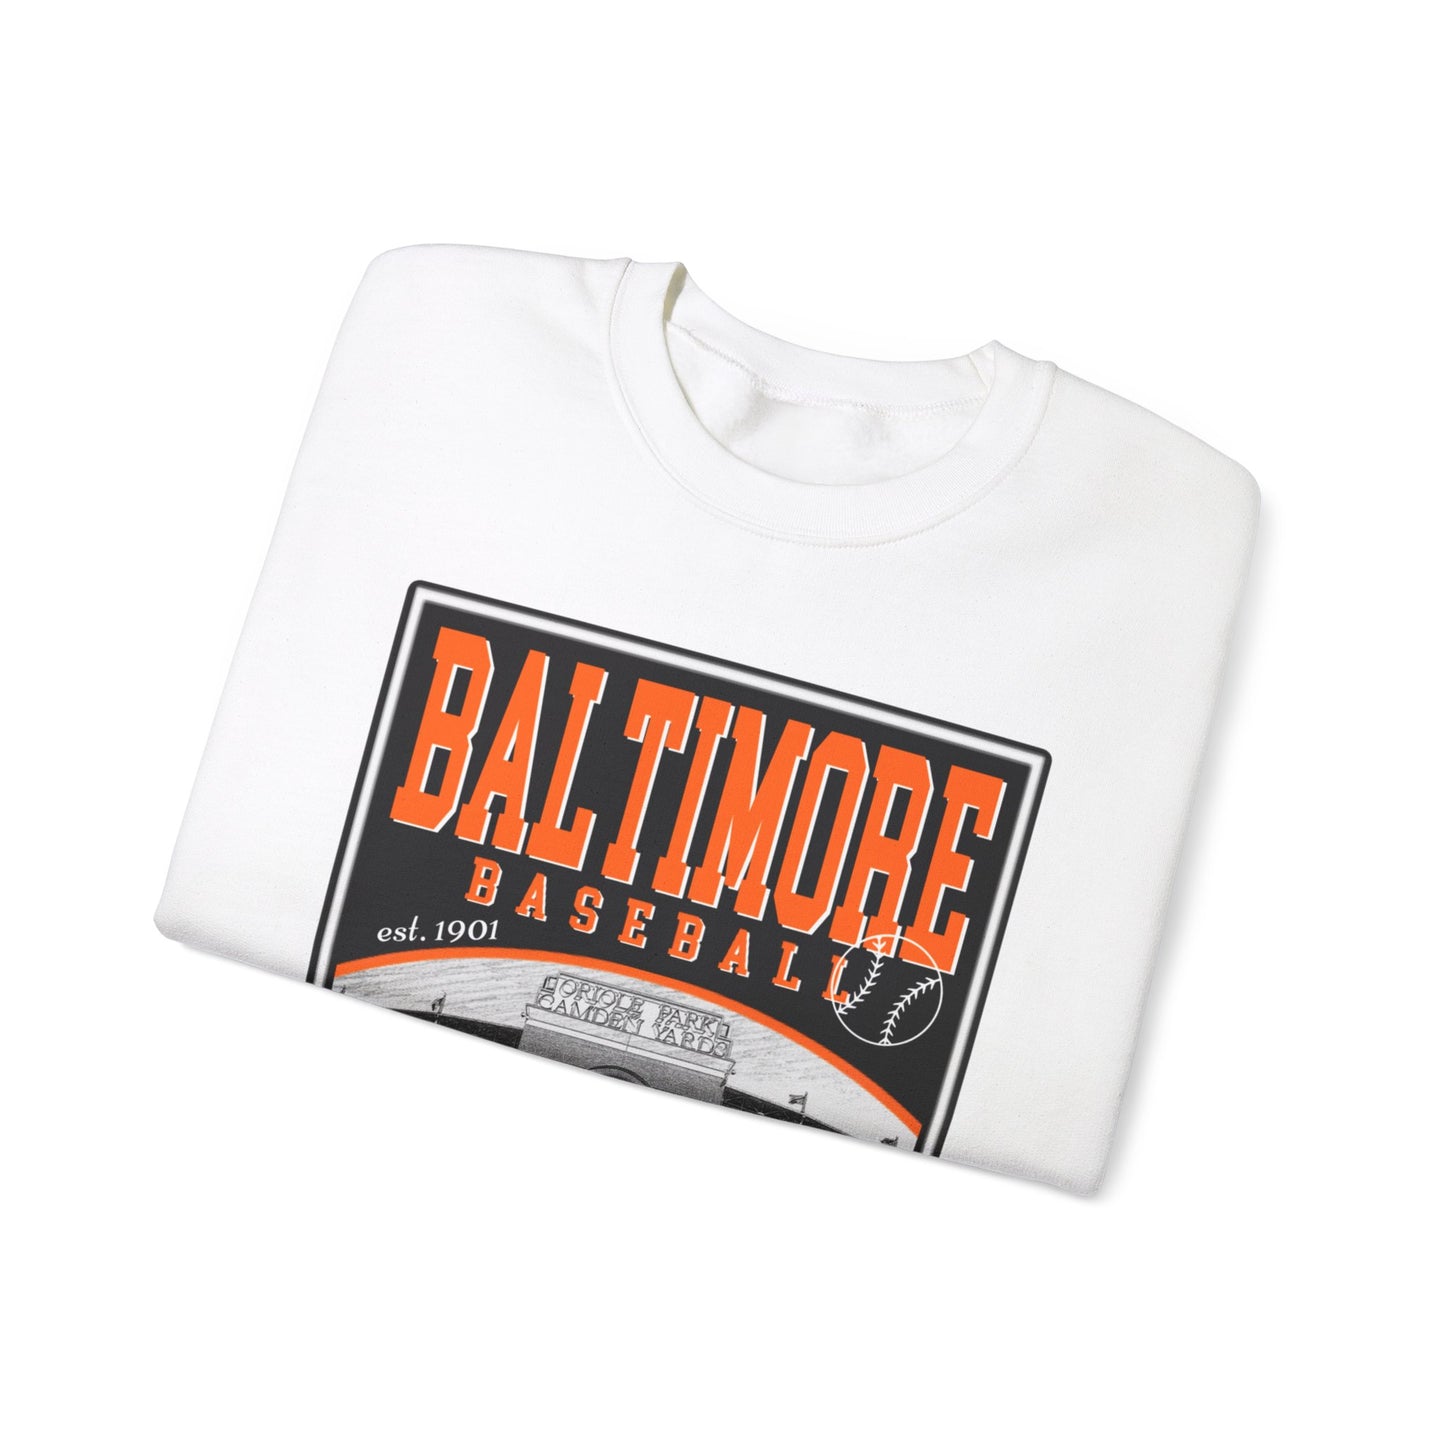 Baltimore Orioles Baseball Sweatshirt